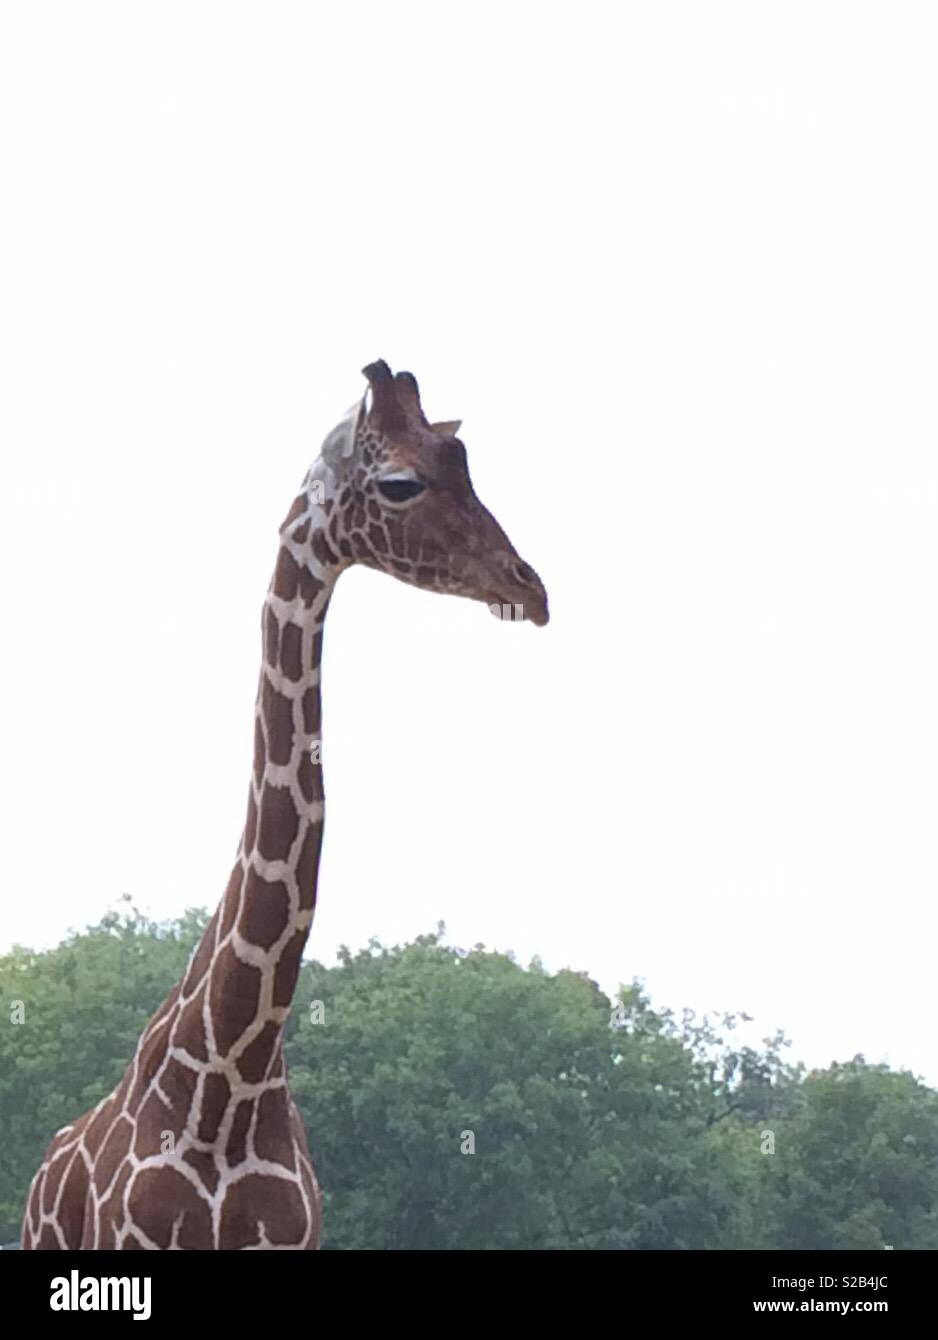 Male Reticulated Giraffe Stock Photo